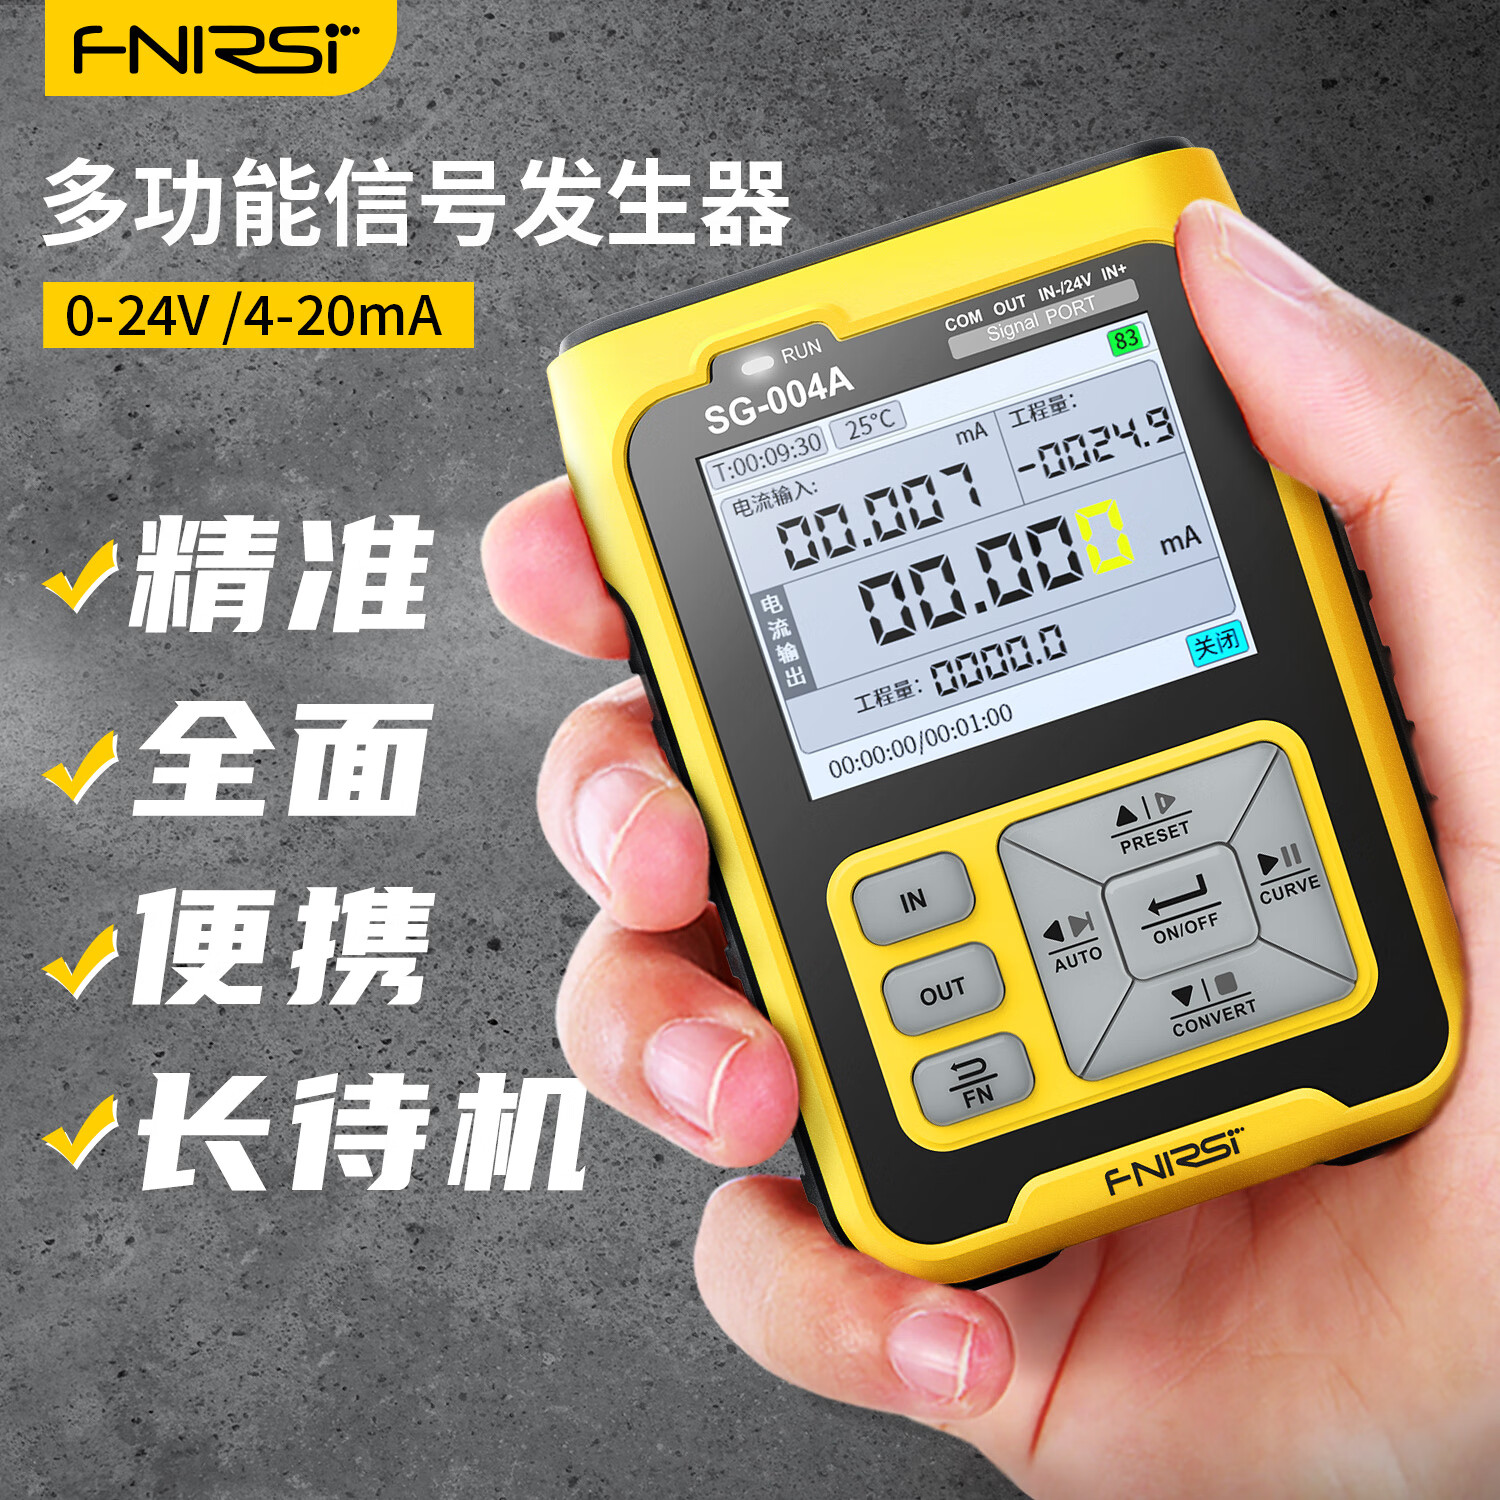 FNIRSISG-004多功能信号发生器4-20ma模拟量电流压热电偶电阻过程校验仪